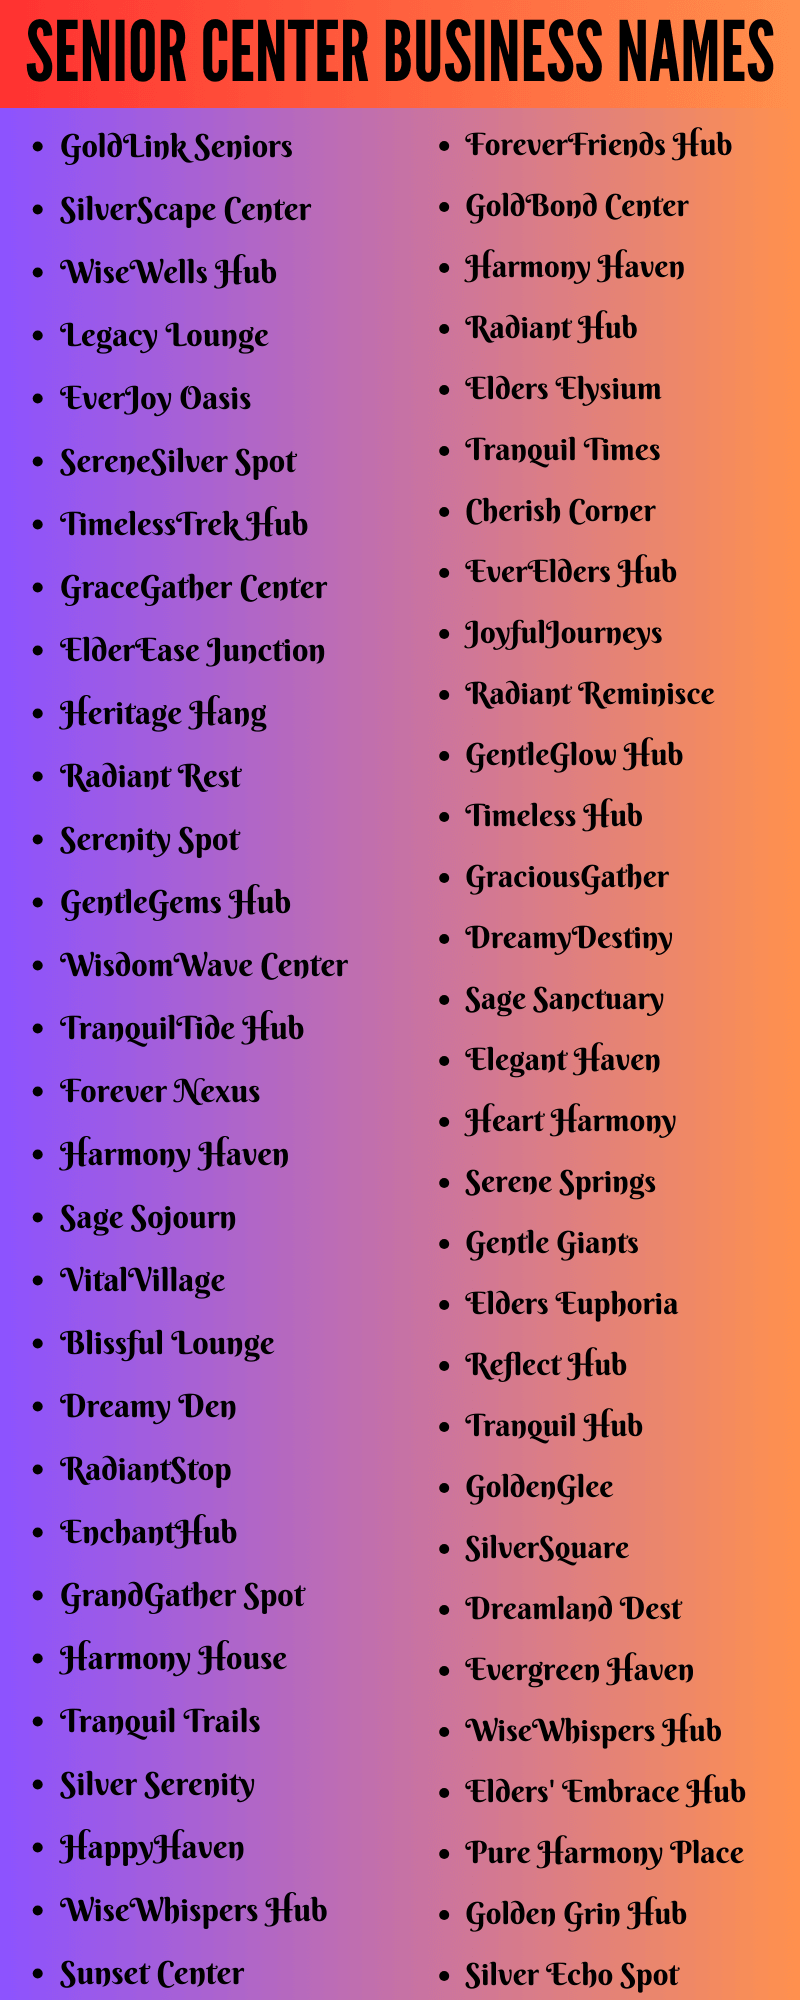 Senior Center Business Names